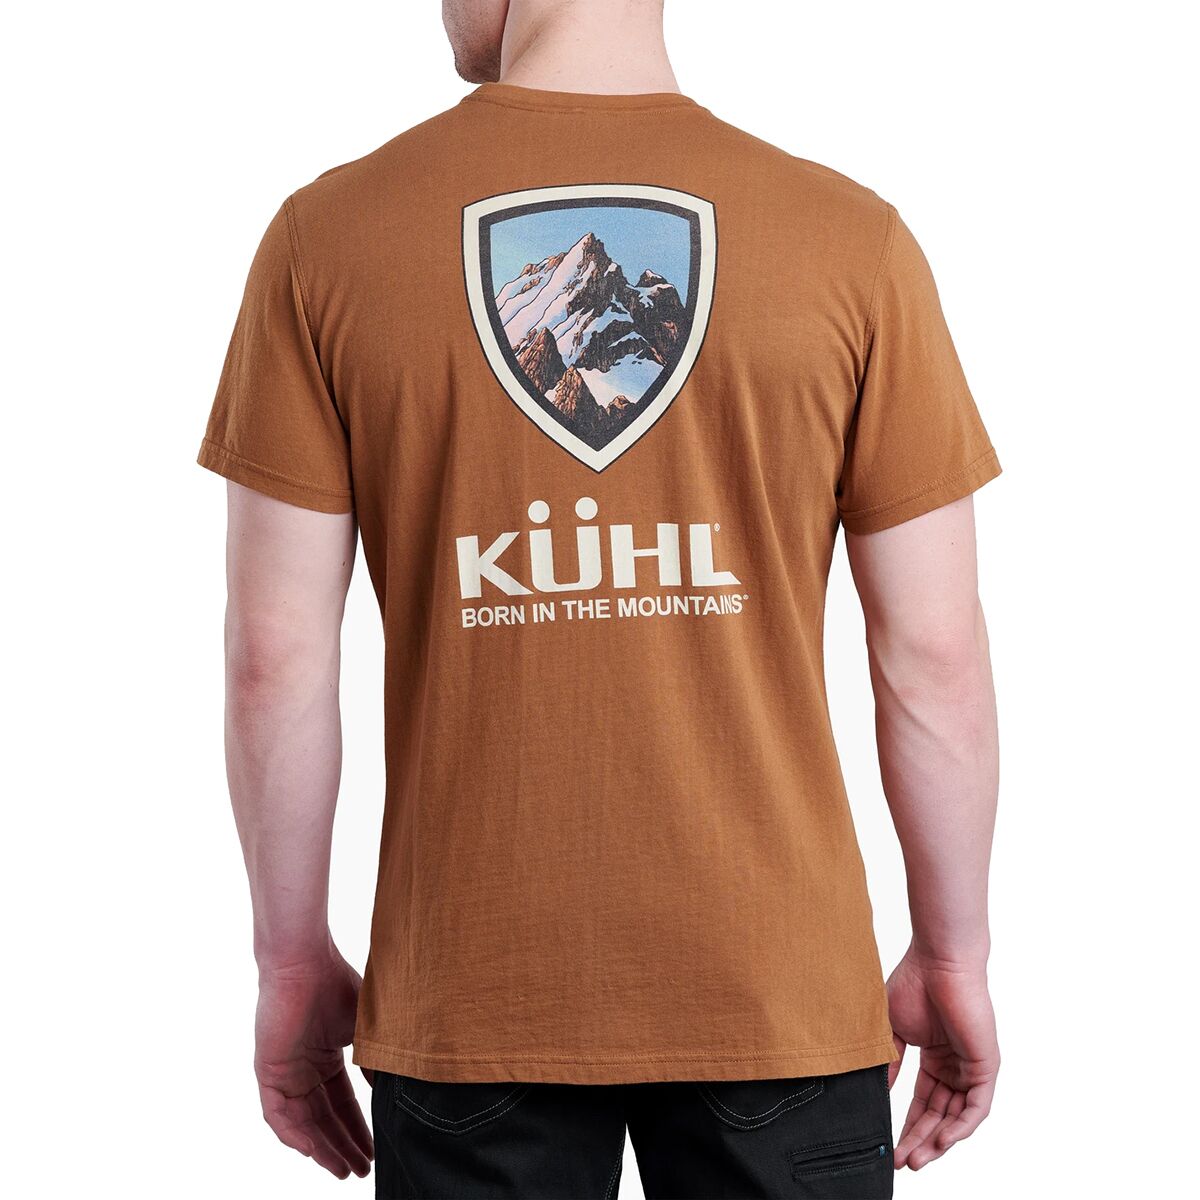 KUHL Men's Shirts